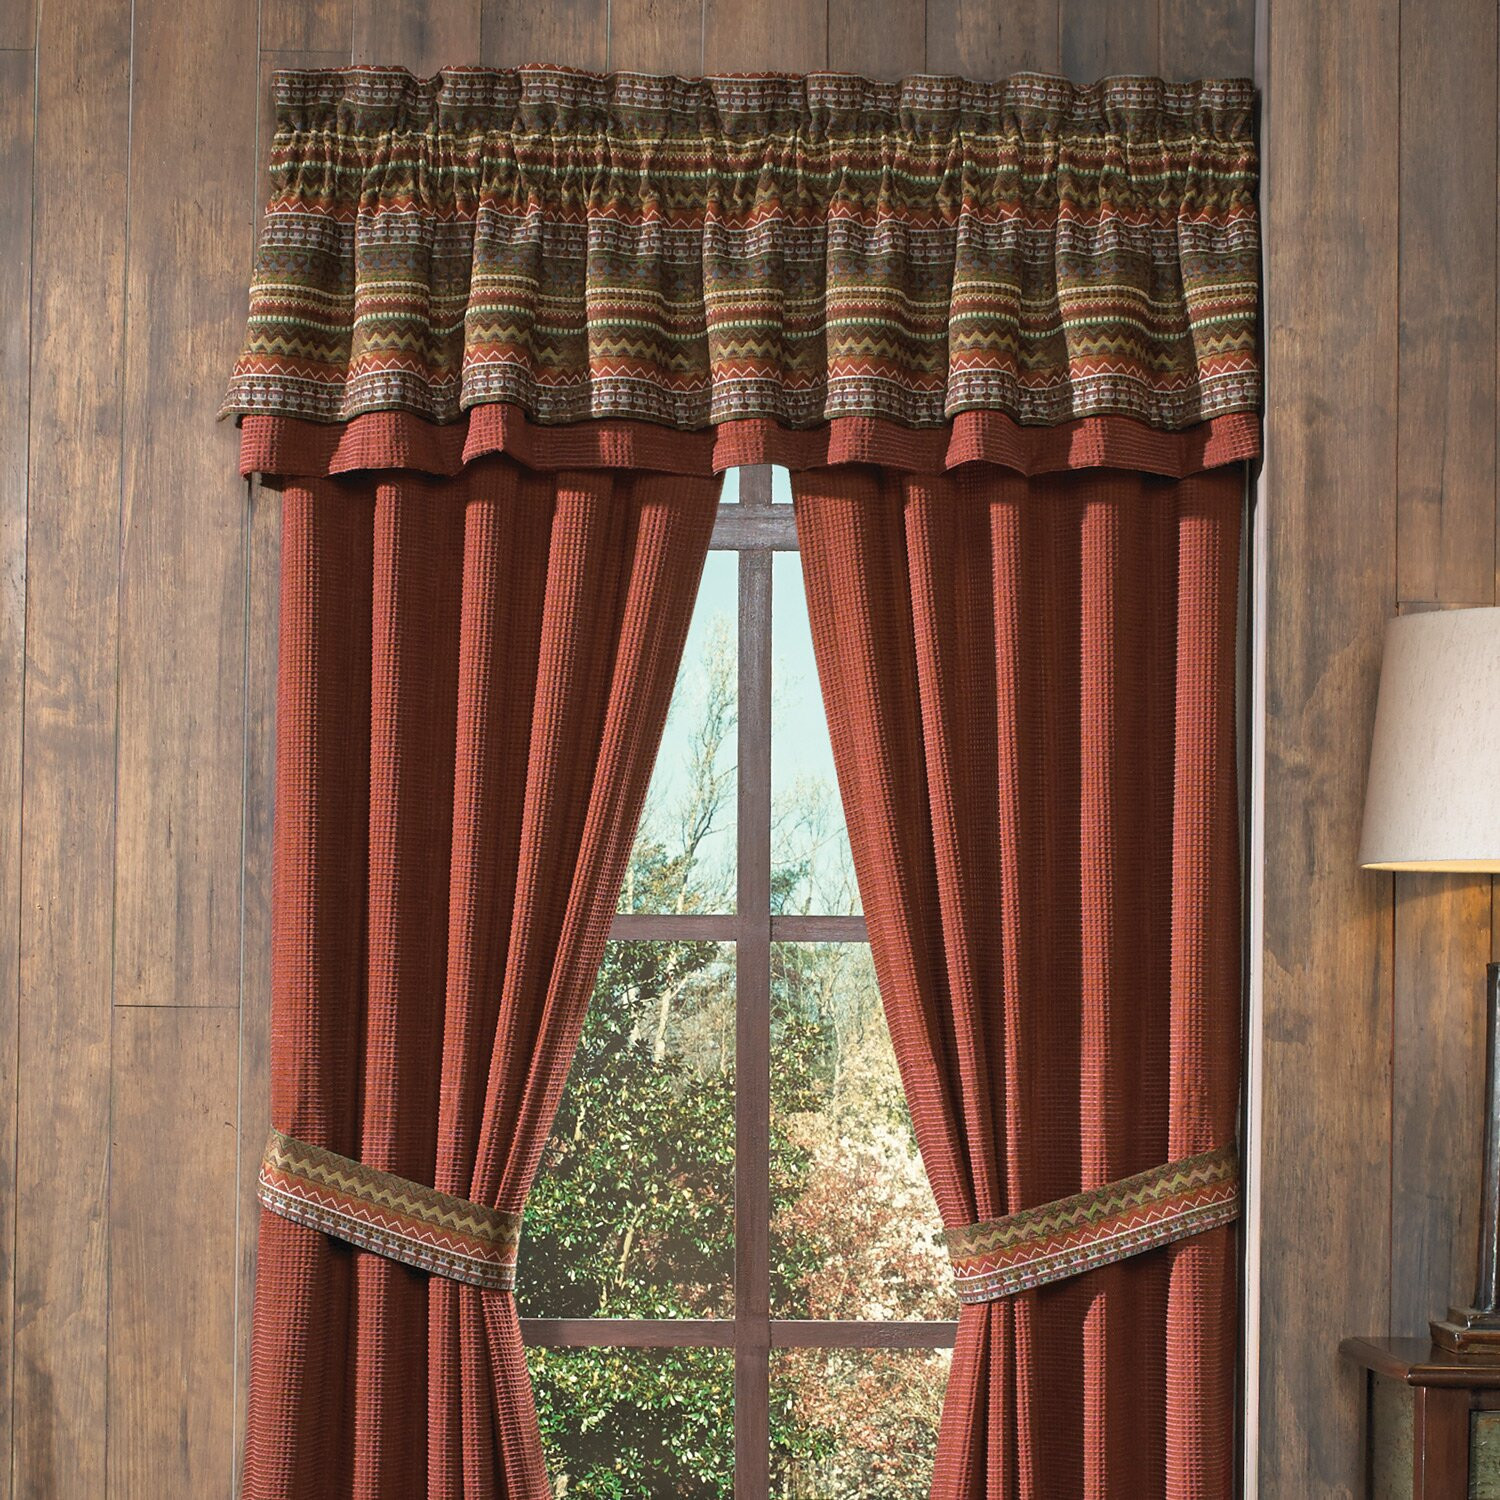 Wayfair Living Room Curtains
 Croscill Horizon Curtain Valance & Reviews